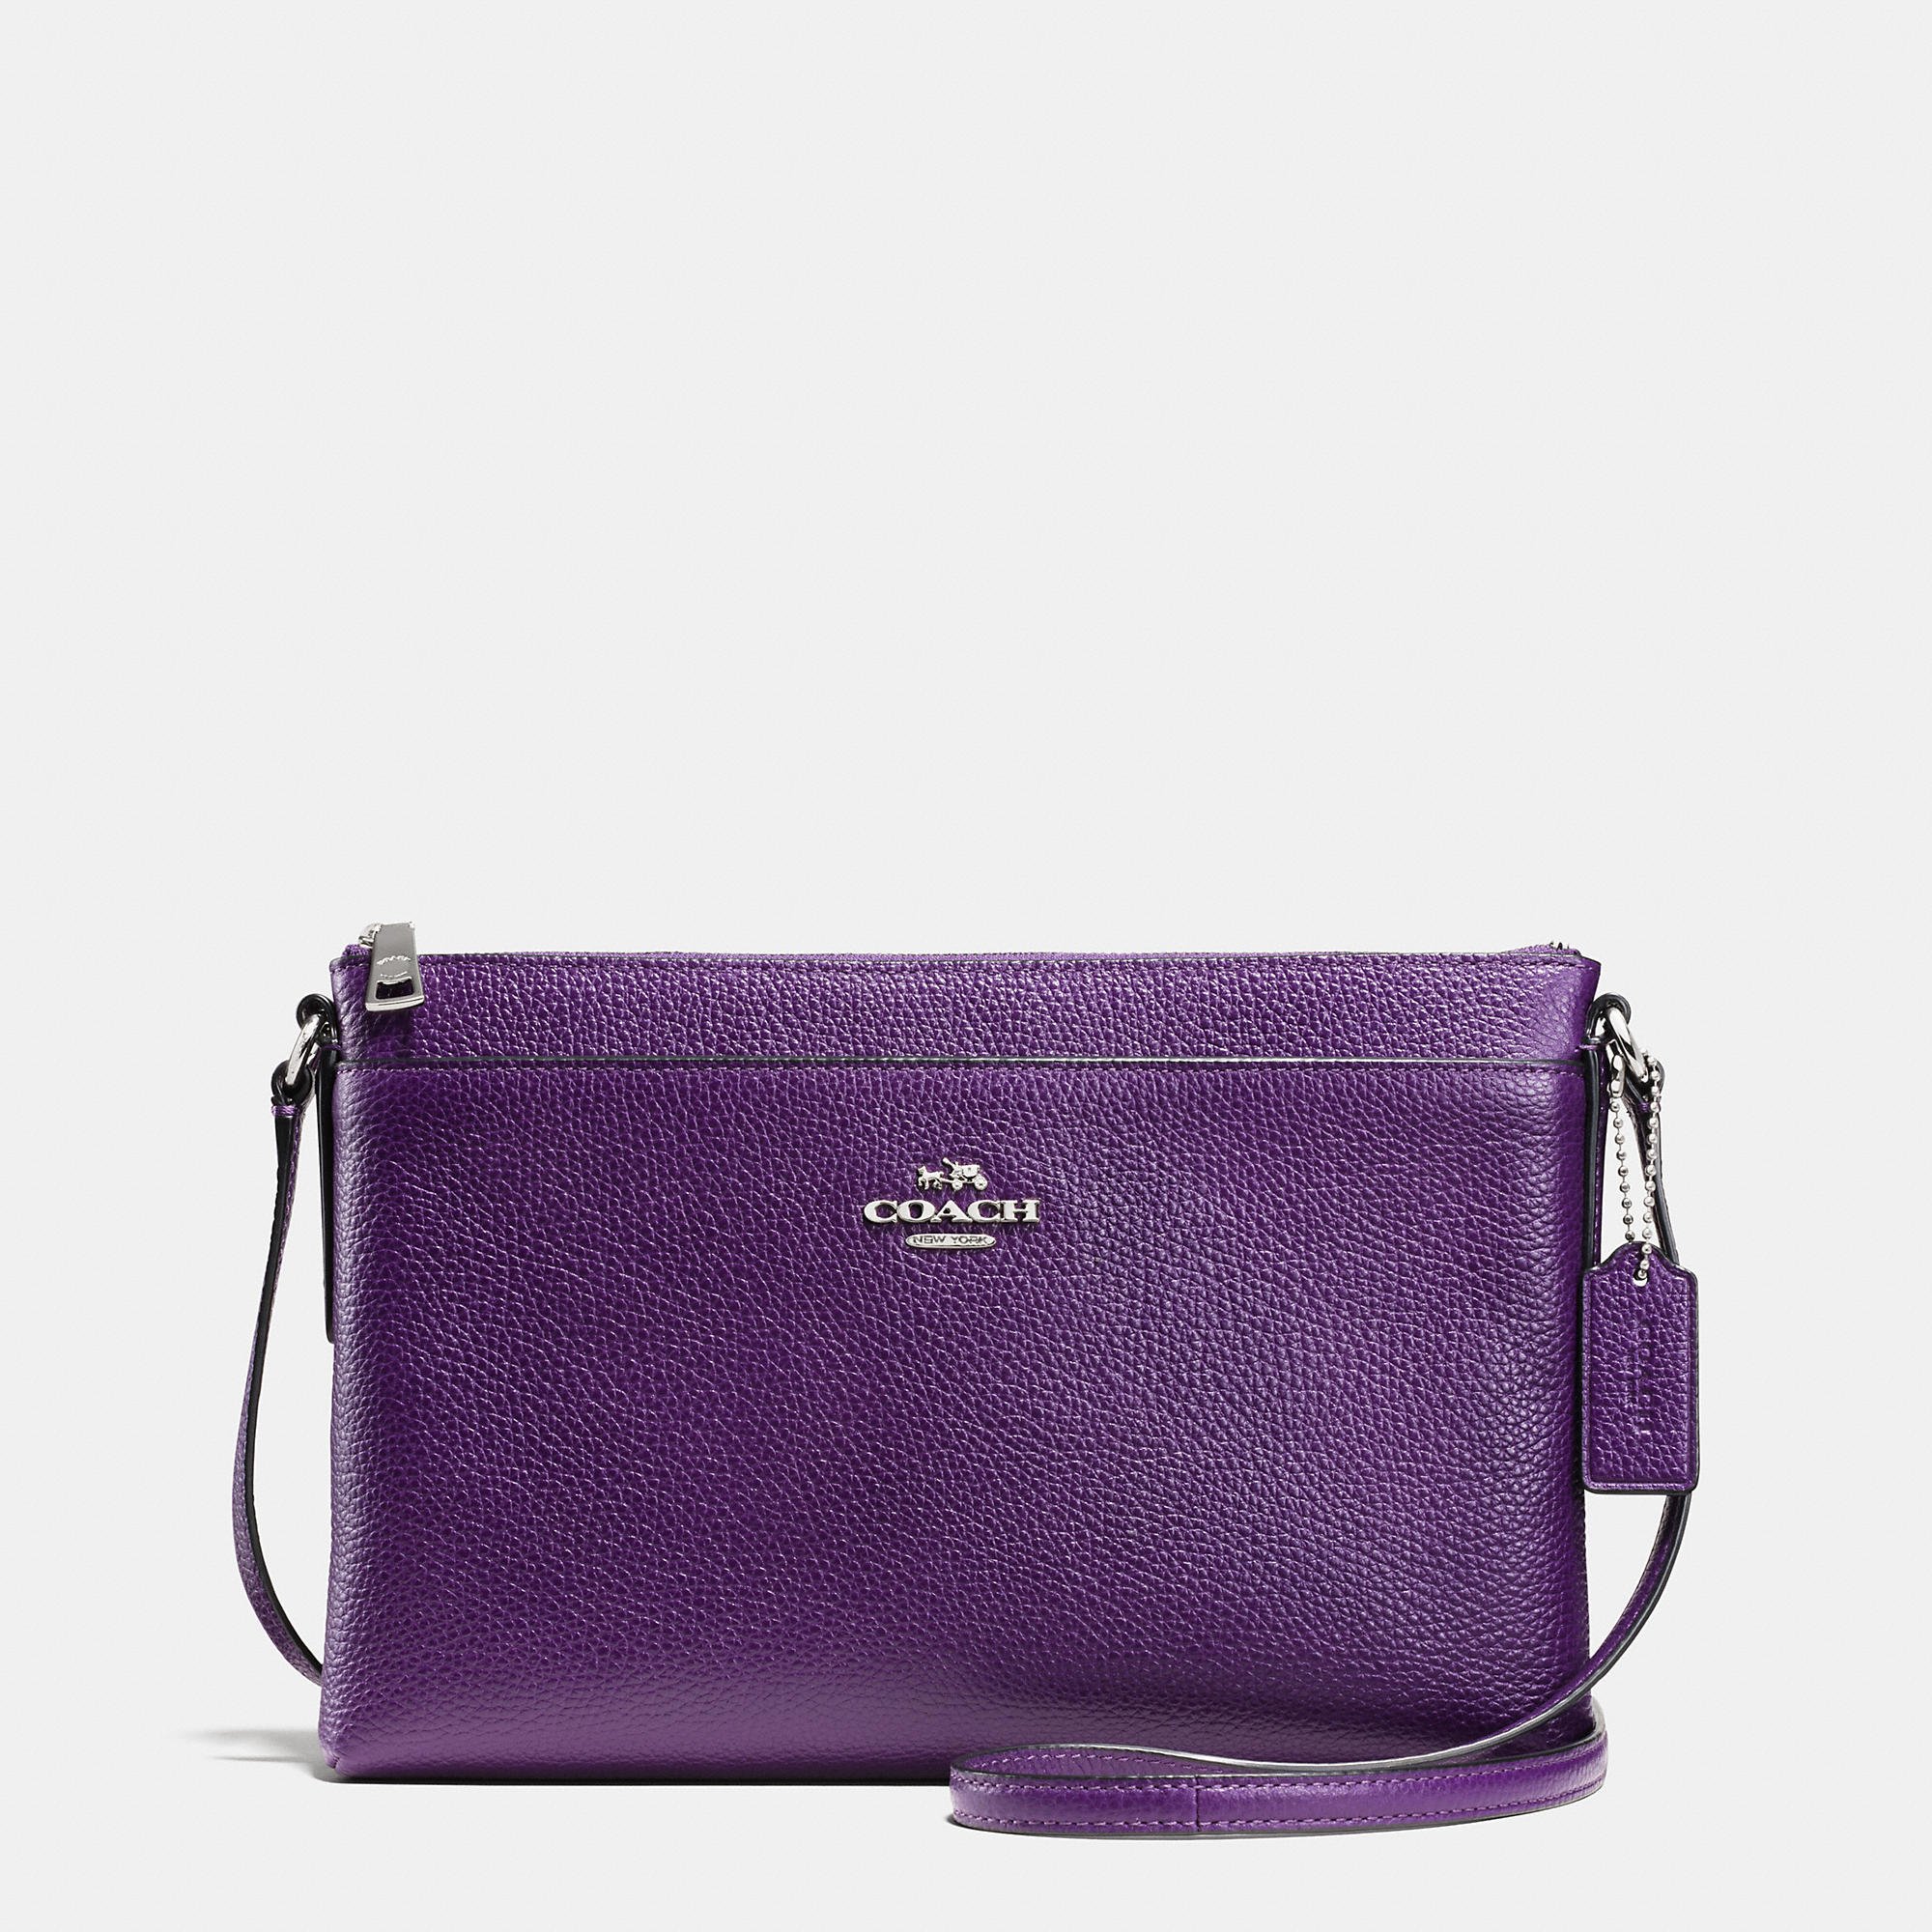 COACH Lyla Double Zip Crossbody in Violet Purple Pebble Leather blog ...